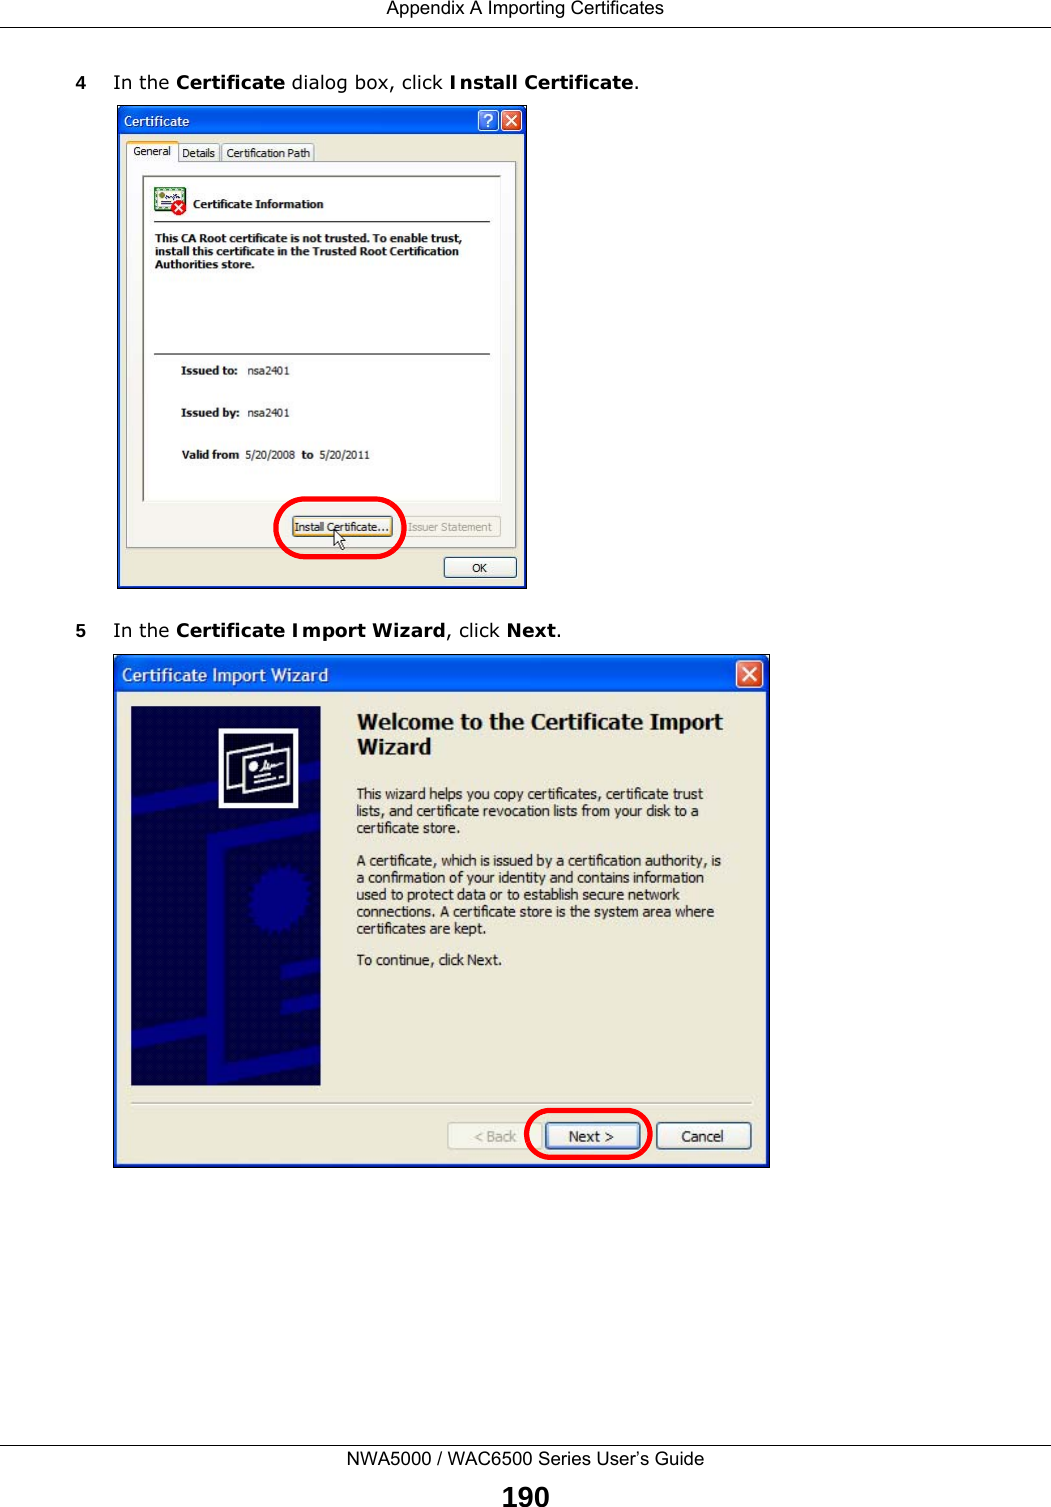 Appendix A Importing CertificatesNWA5000 / WAC6500 Series User’s Guide1904In the Certificate dialog box, click Install Certificate.5In the Certificate Import Wizard, click Next.